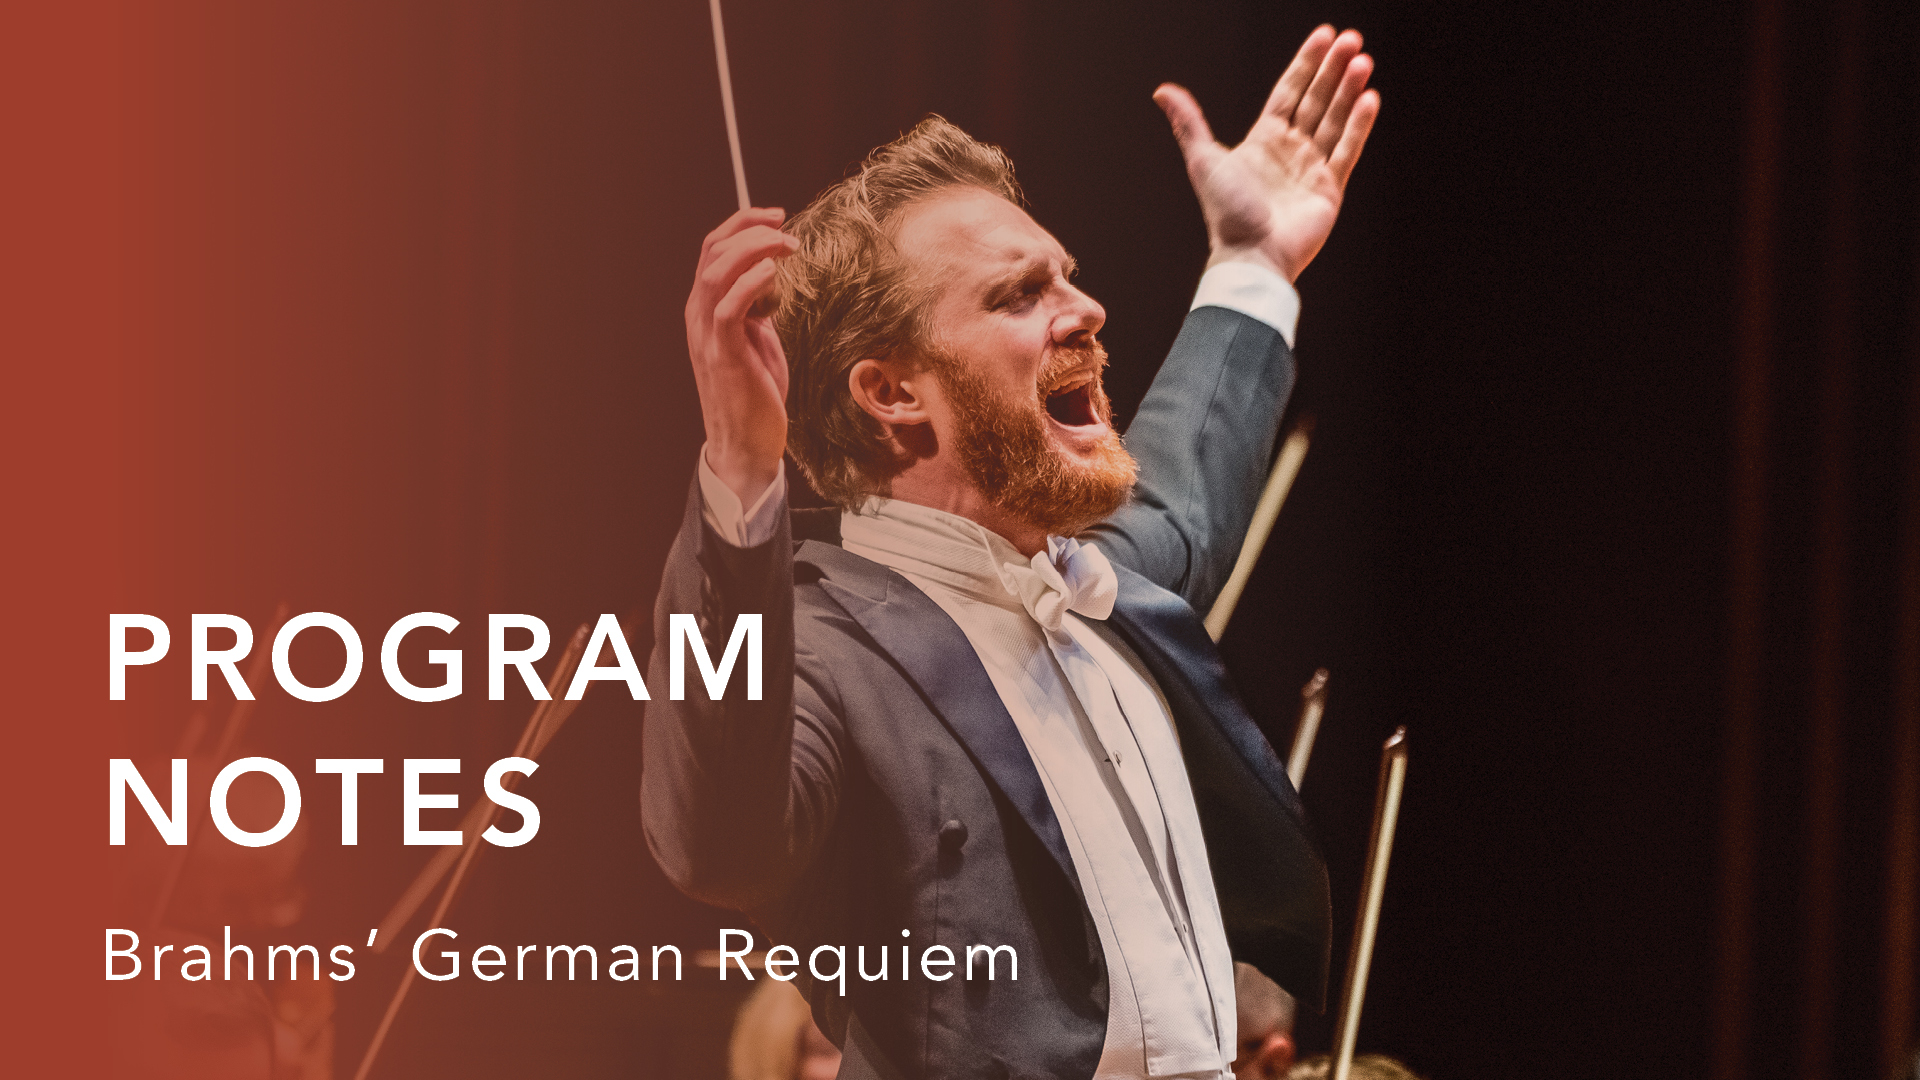 Featured image for “Program Notes: Brahms’ German Requiem”